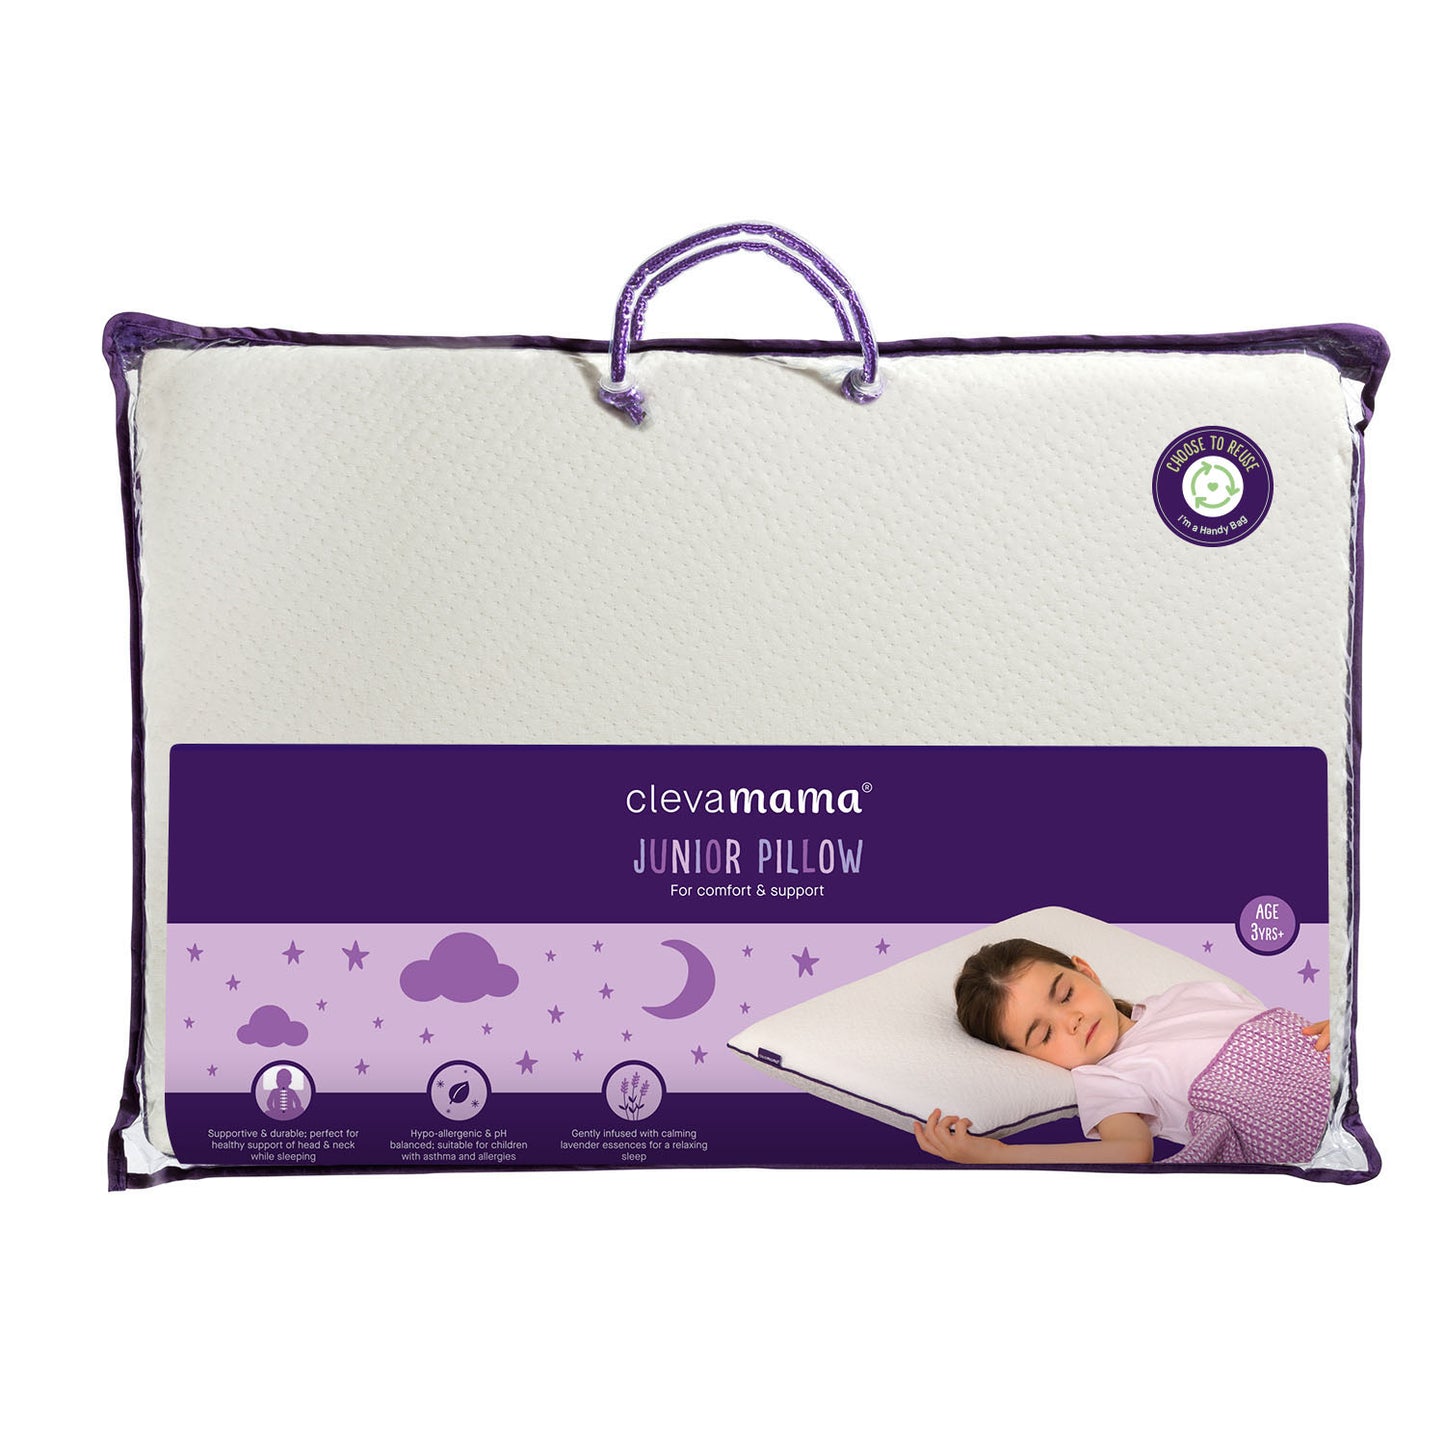 Clevamama ClevaFoam® Junior Pillow